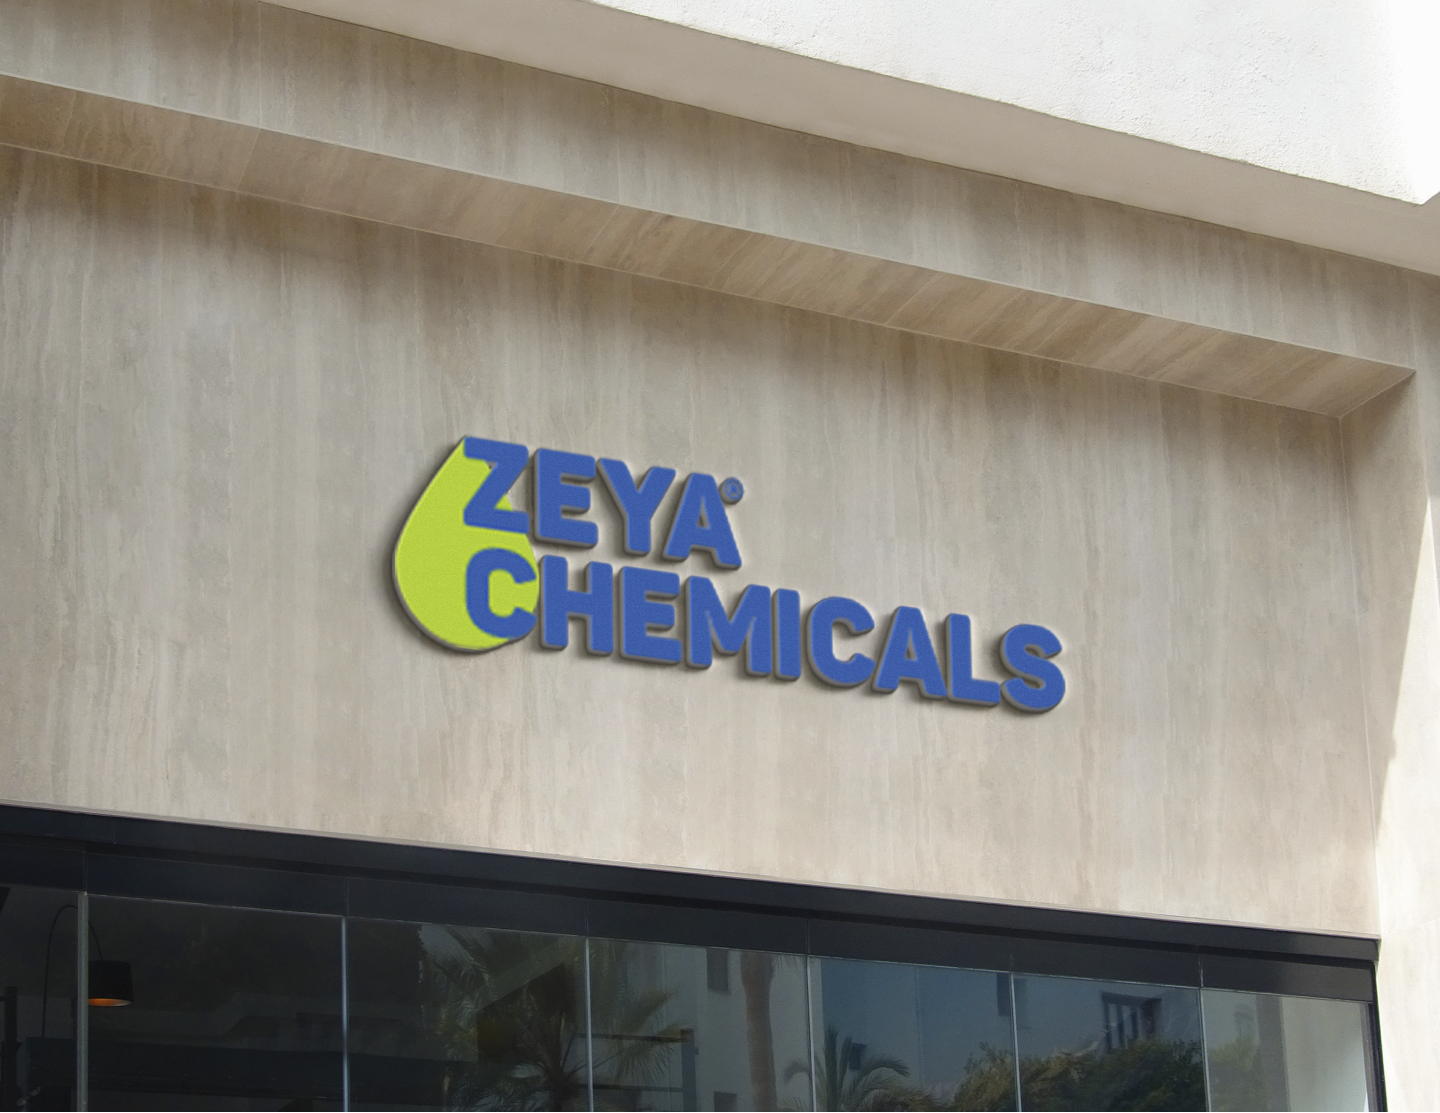 Zeya Chemicals